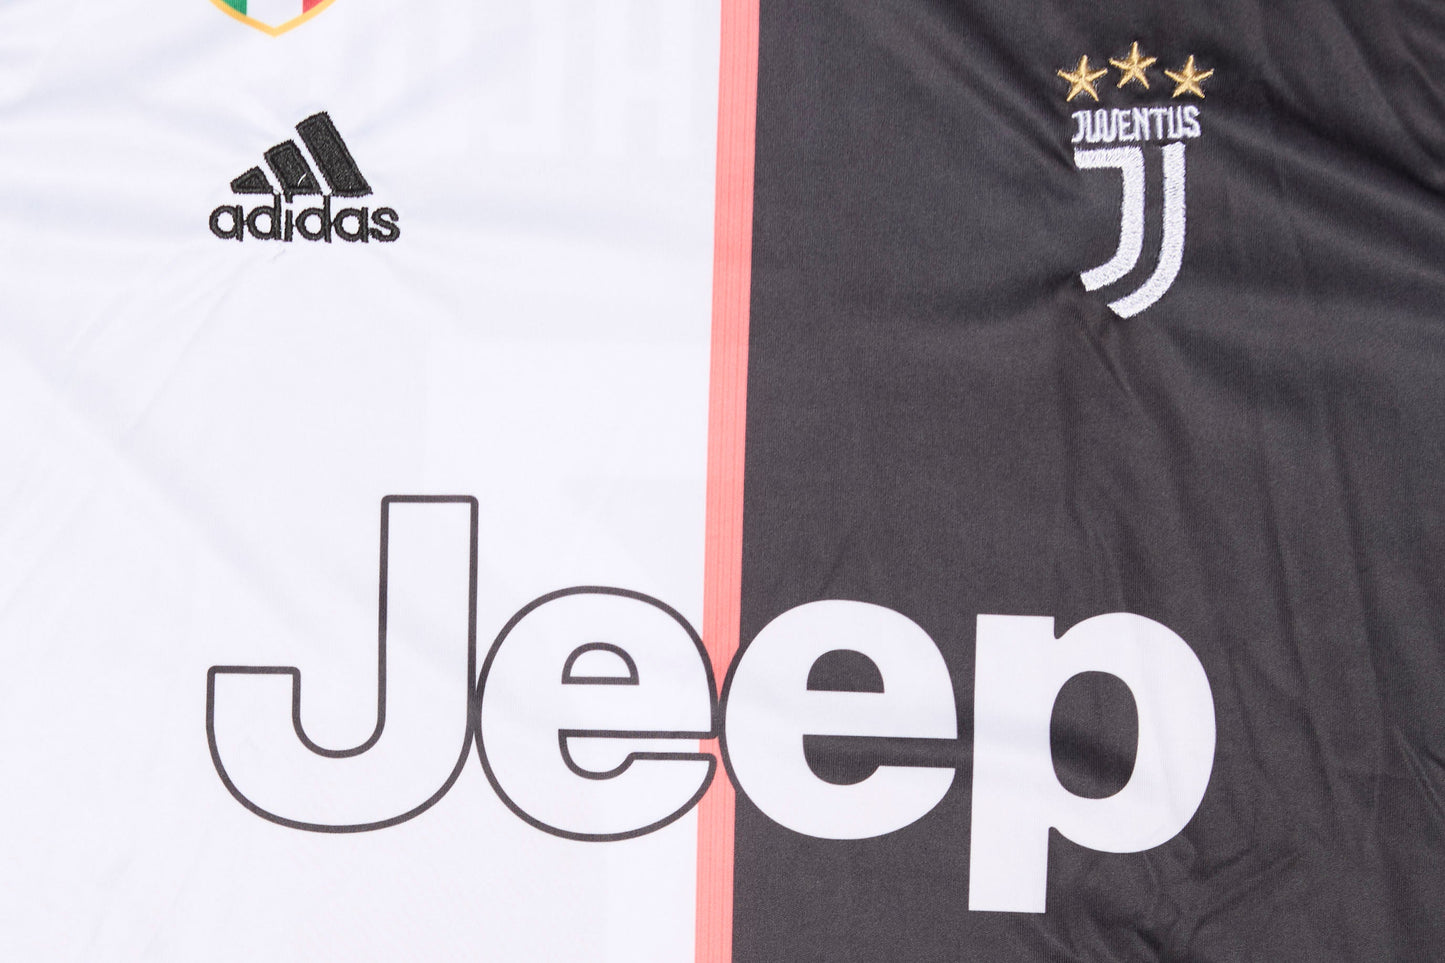 Mens Adidas Juventus CR7 Shirt - L